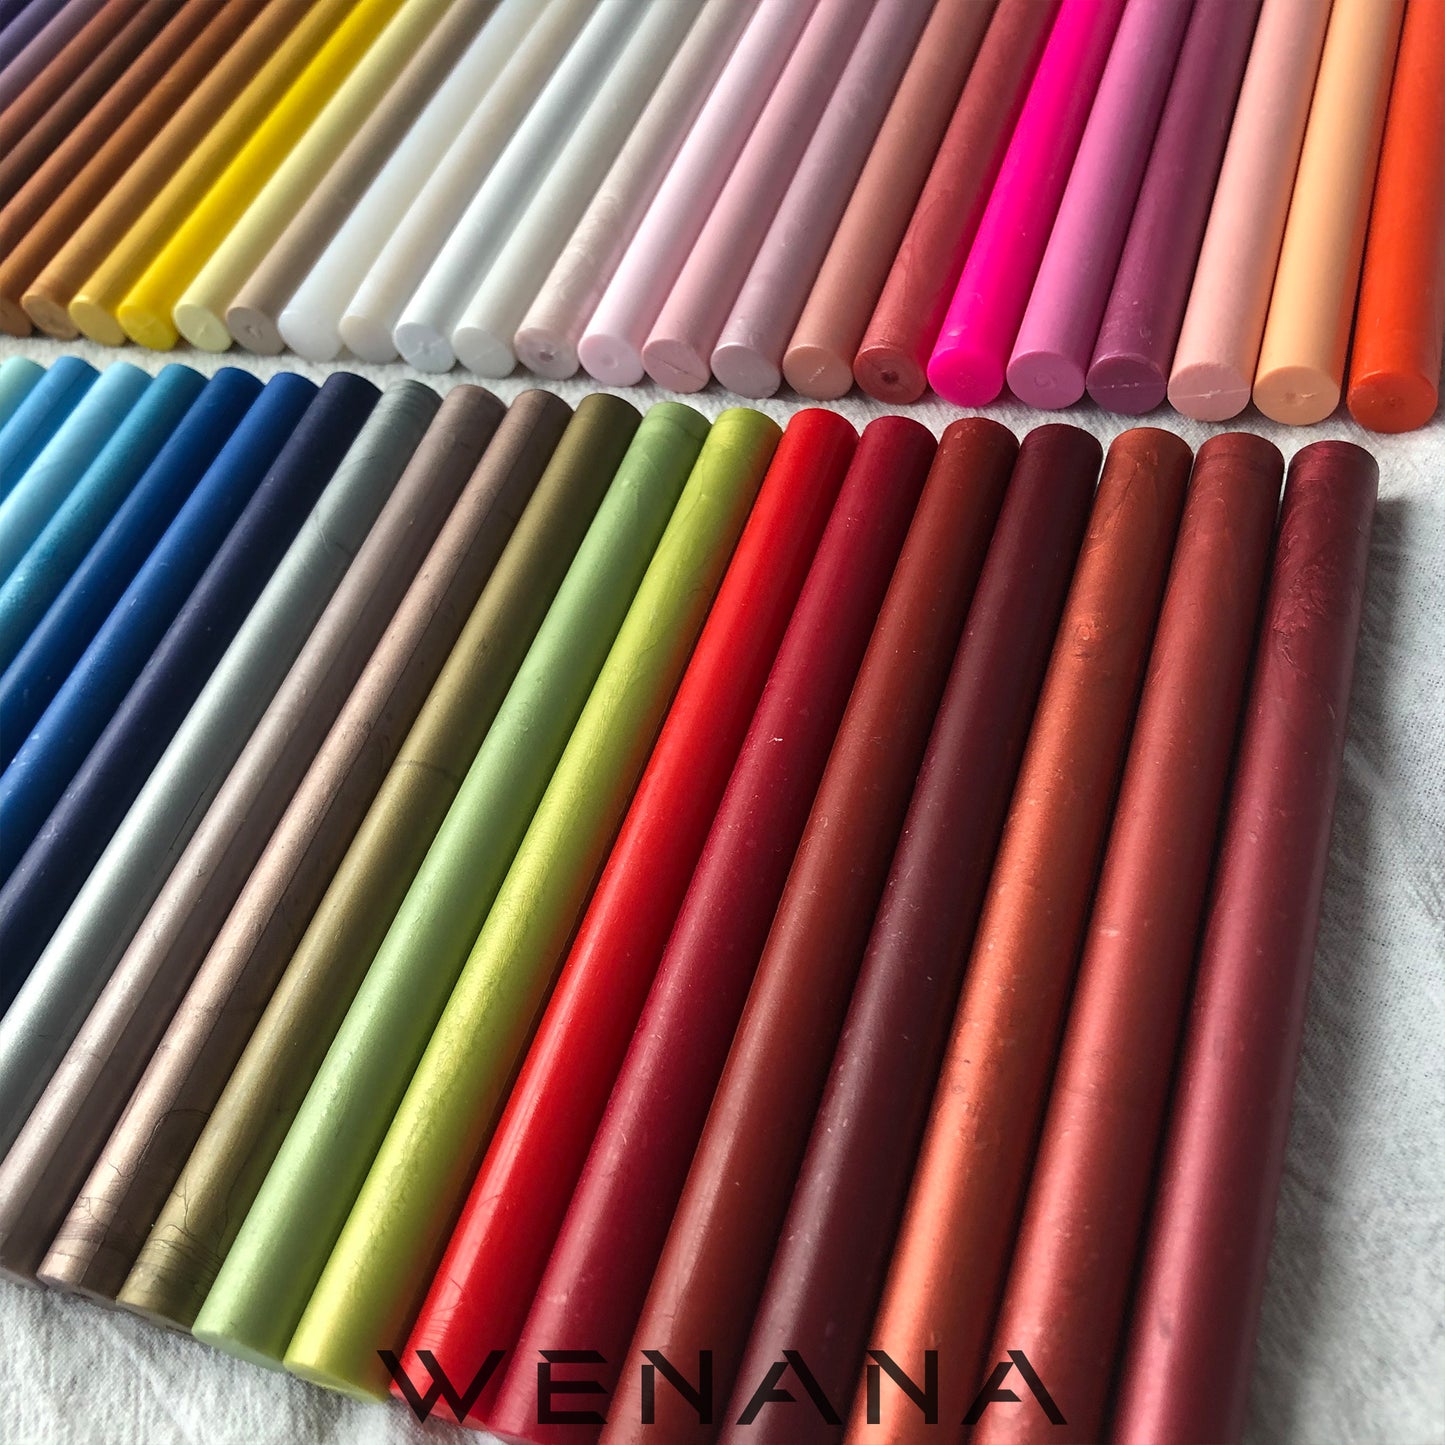 Wax Seal Sticks, Premium 57 Colors Sealing Wax Sticks